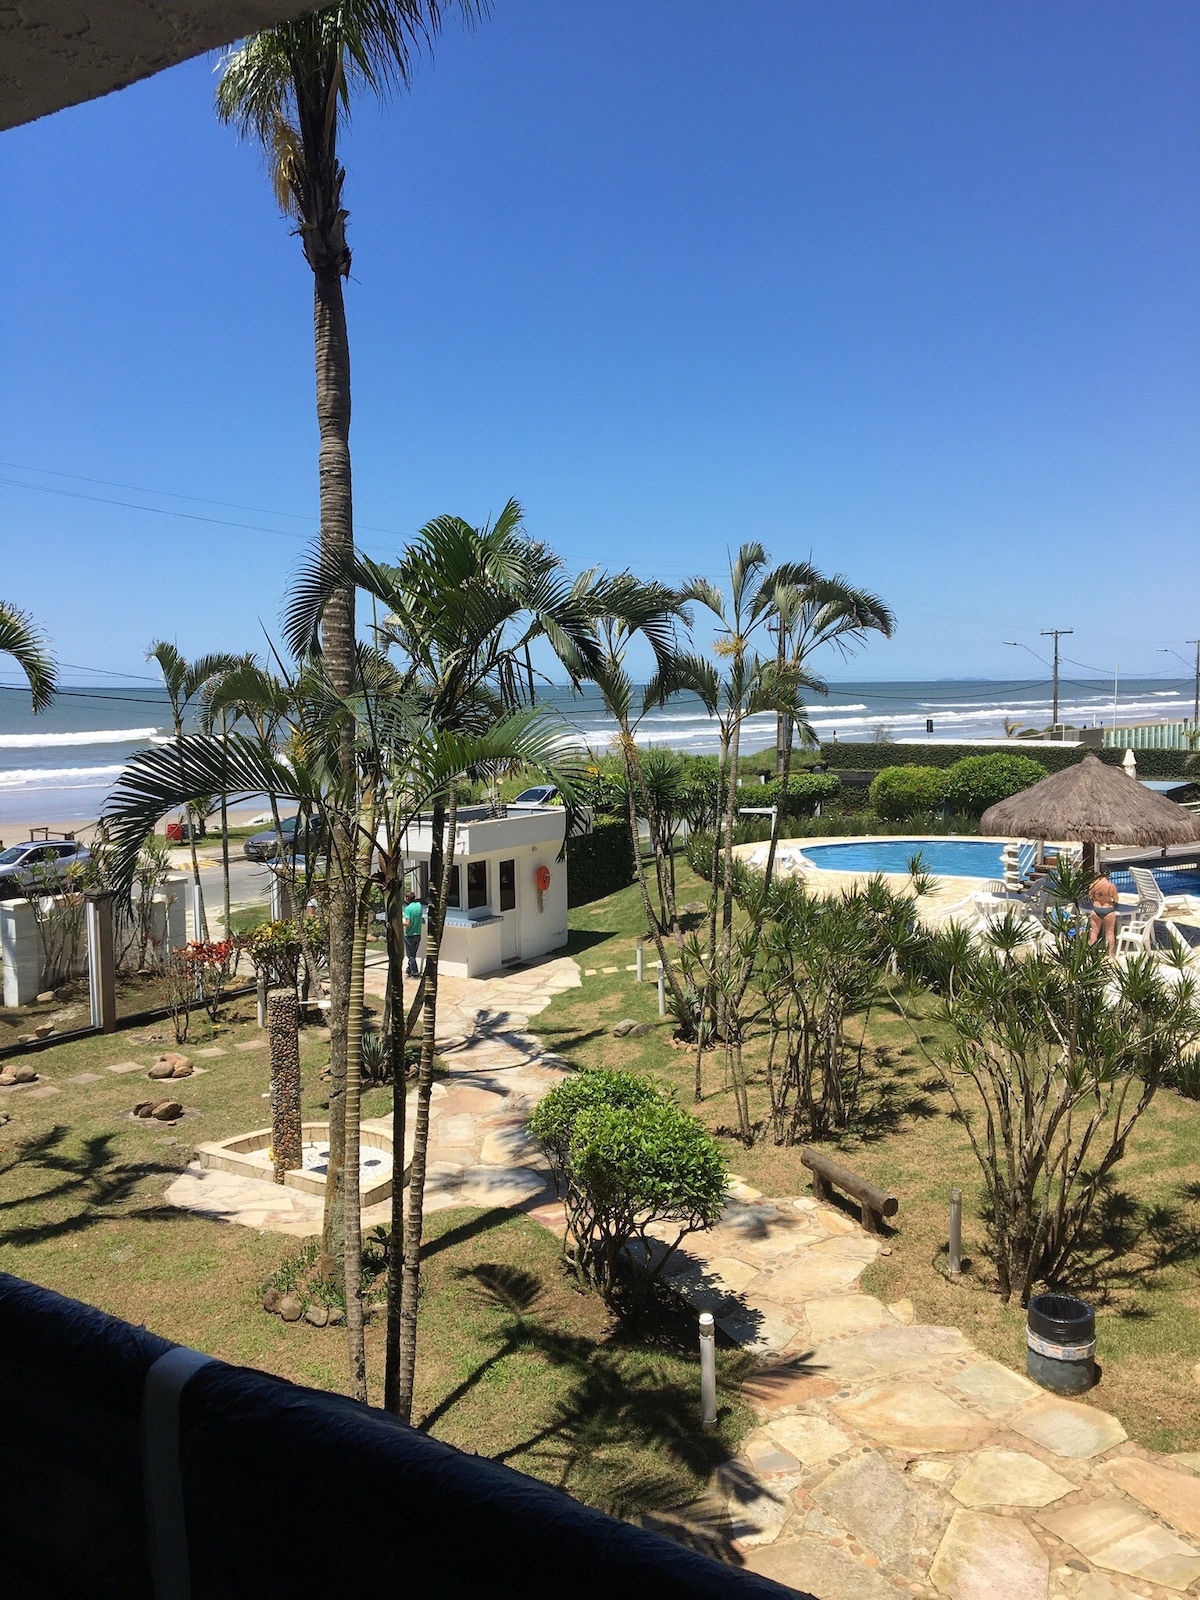 2 Resort Flórida Terrace espetacular beira mar